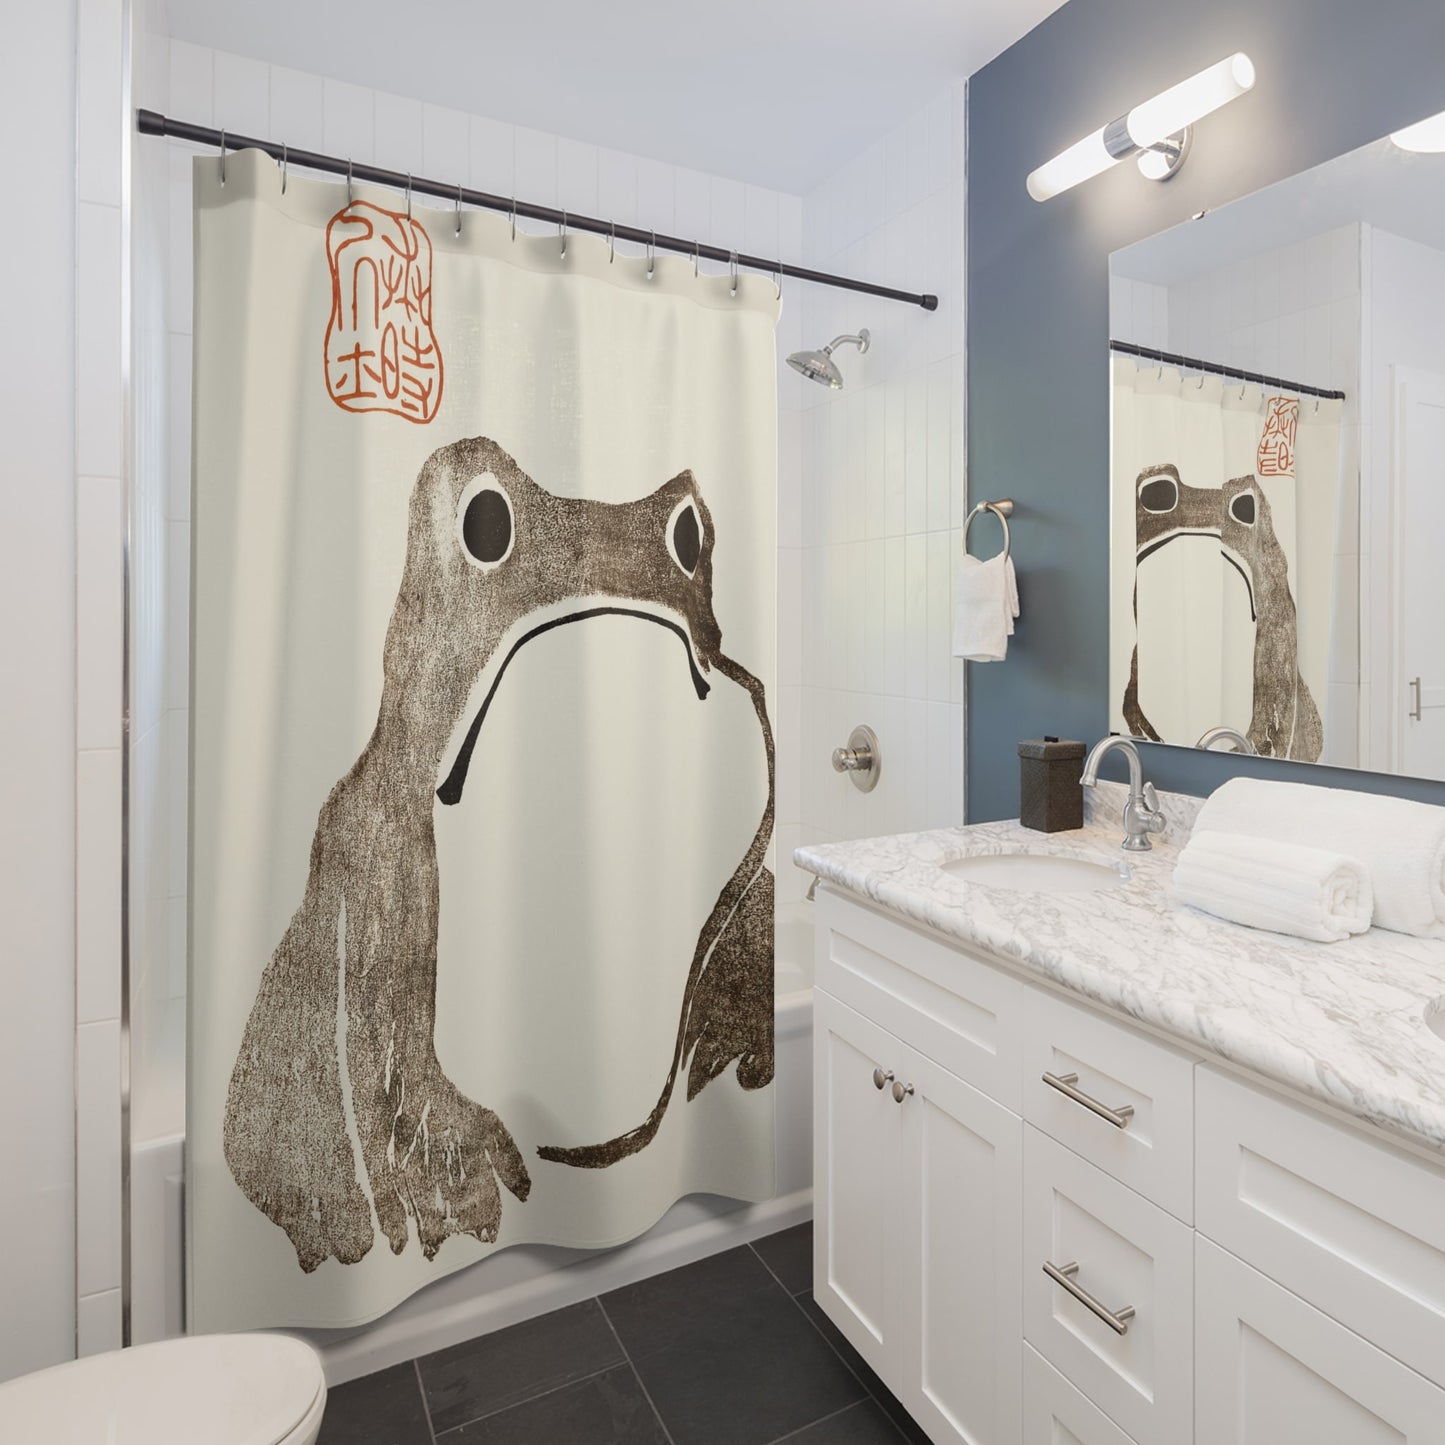 Grumpy Frog Shower Curtain | Funny Sad Frog Bathroom Decor